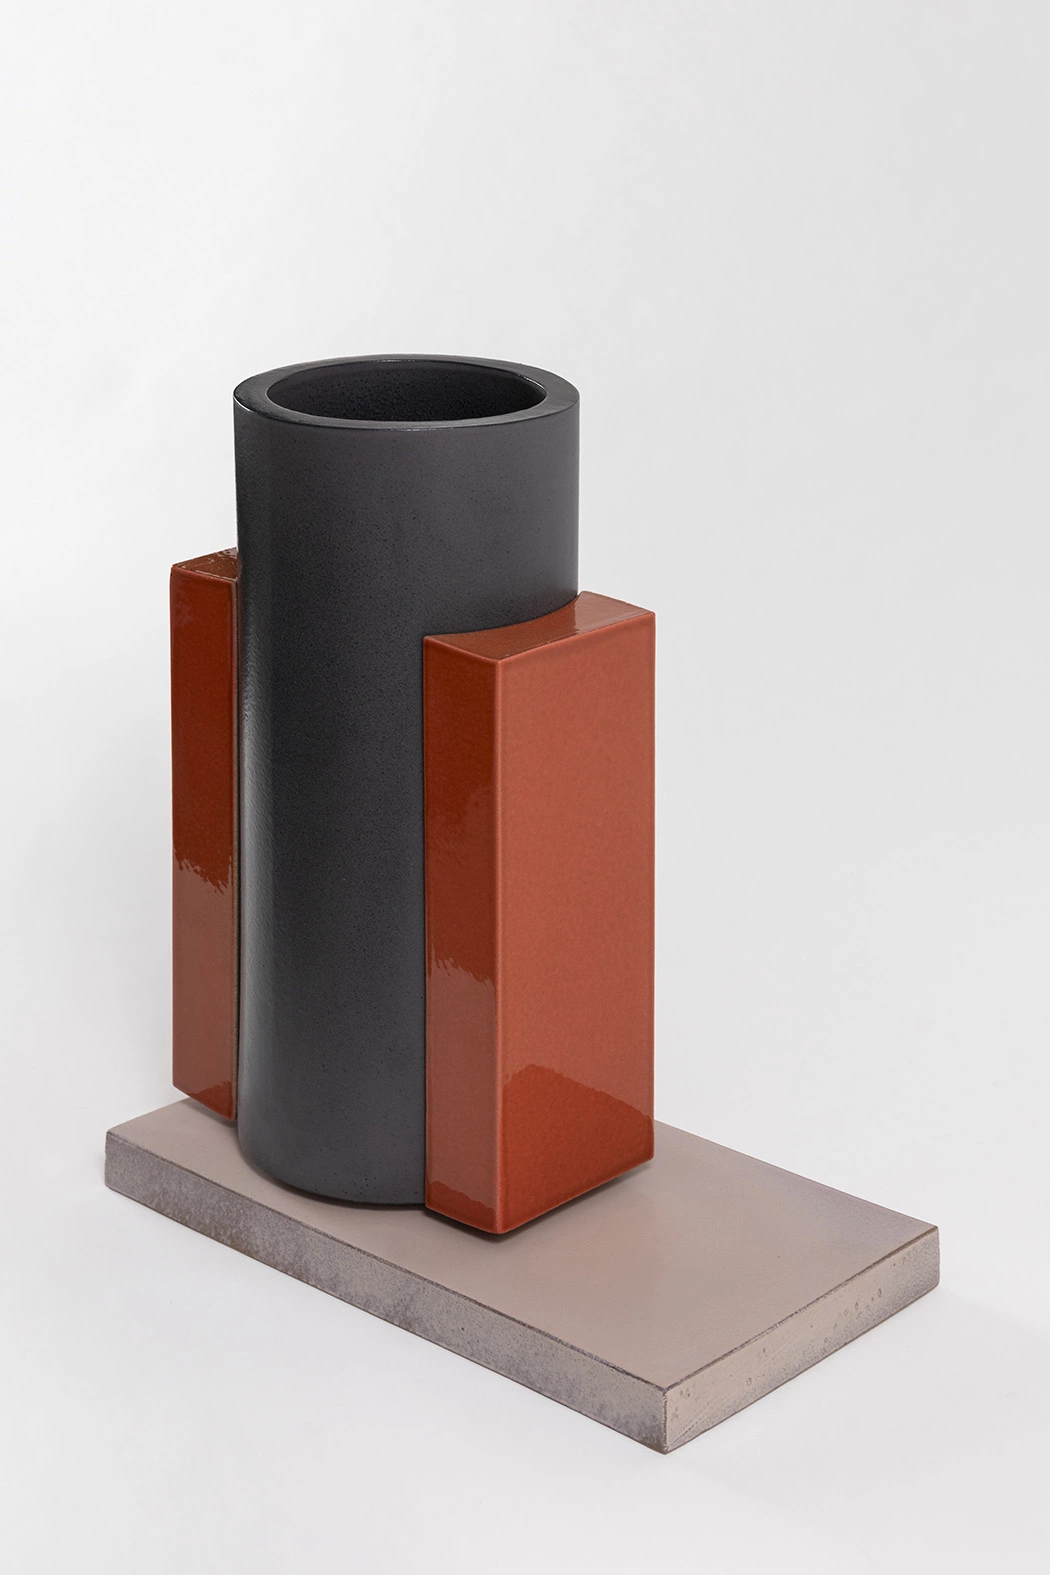 Tajimi 10 - Ronan Bouroullec - Vase - Galerie kreo